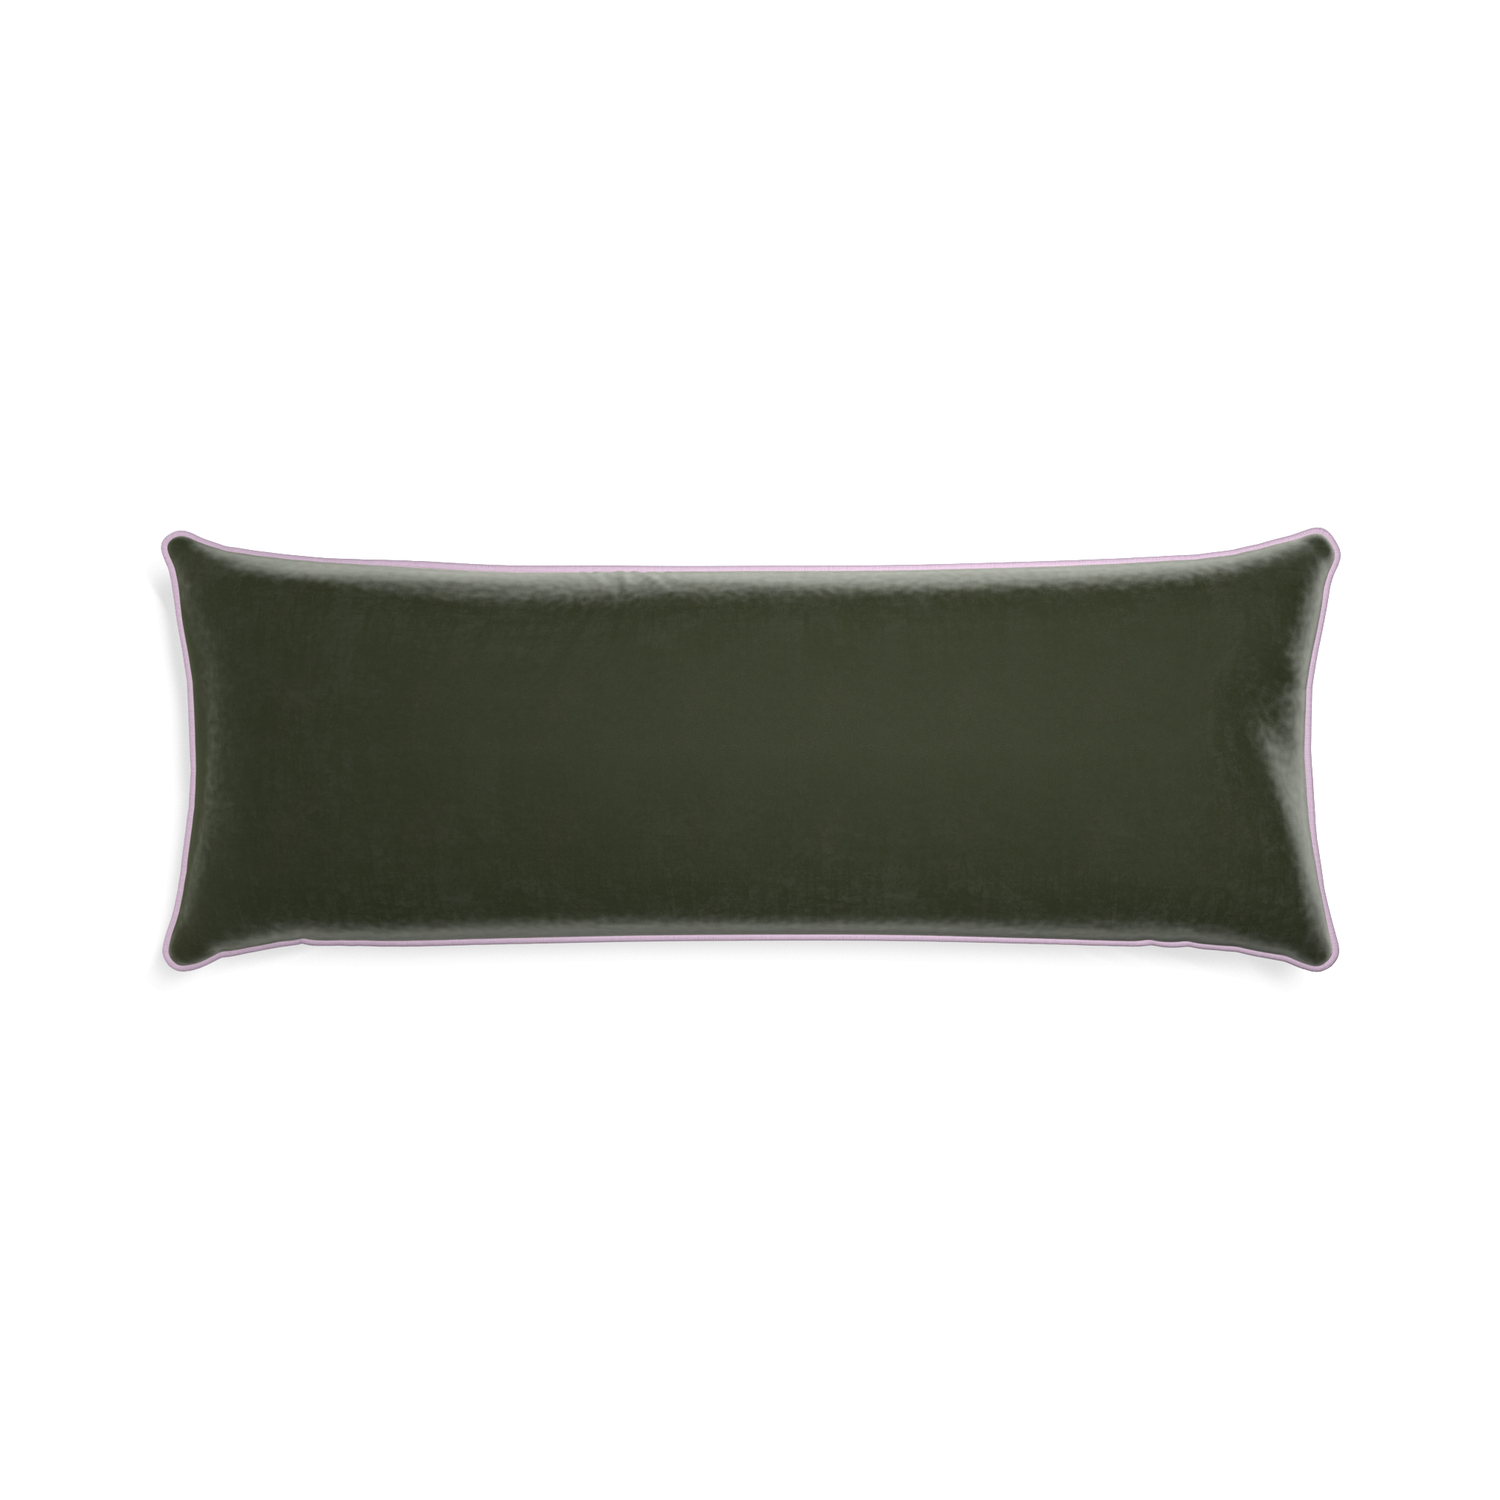 Xl-lumbar fern velvet custom pillow with l piping on white background